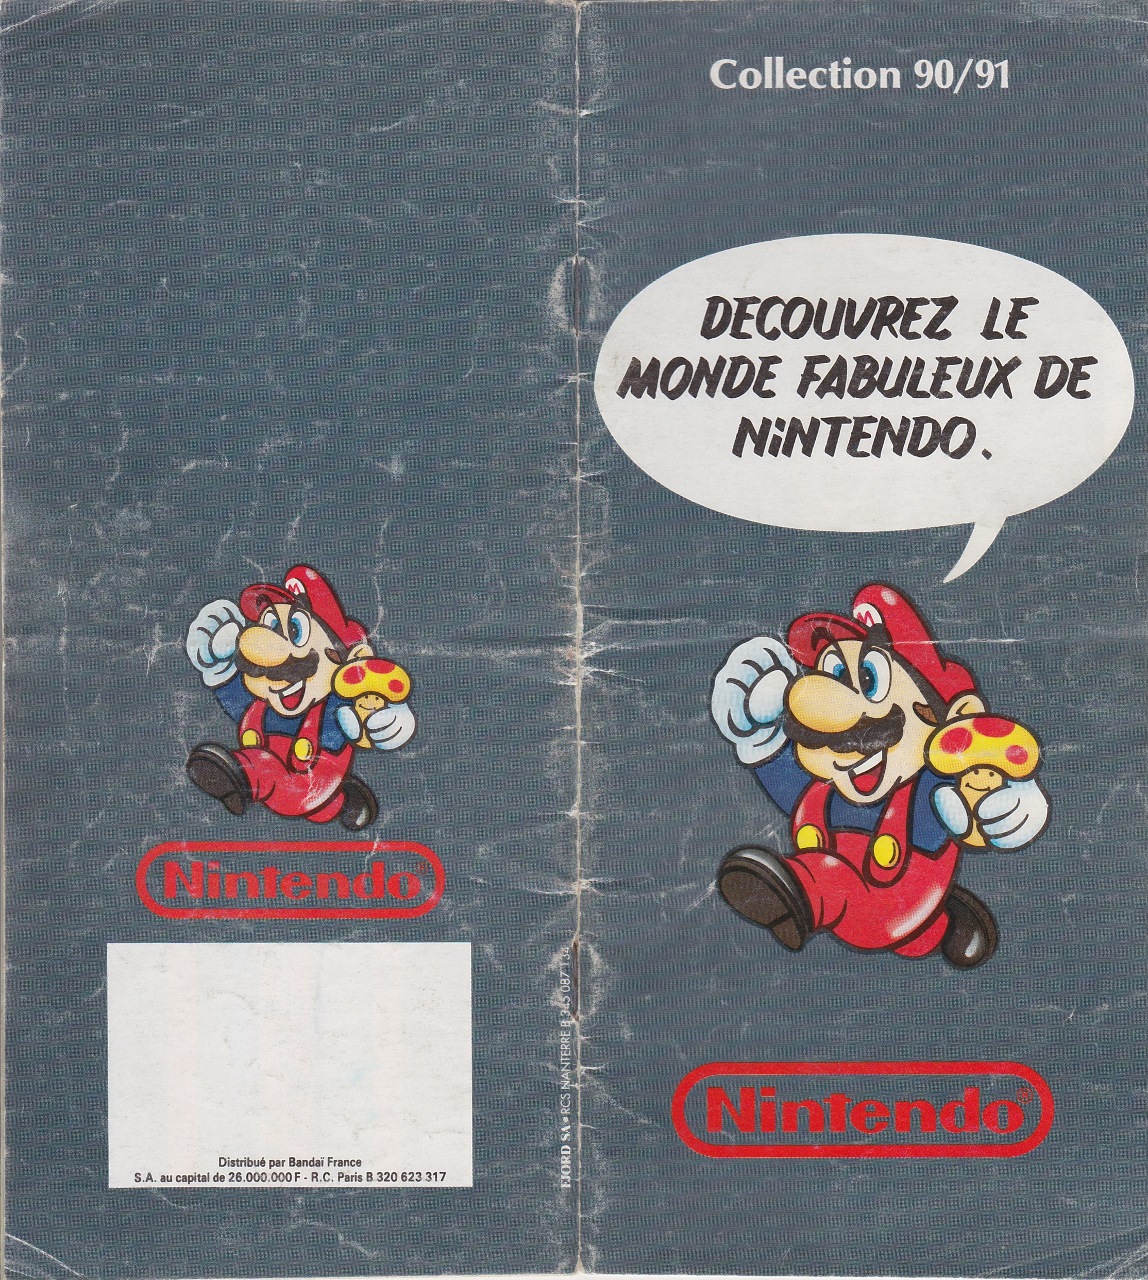 Catalogue de la NES 1990 - 1991